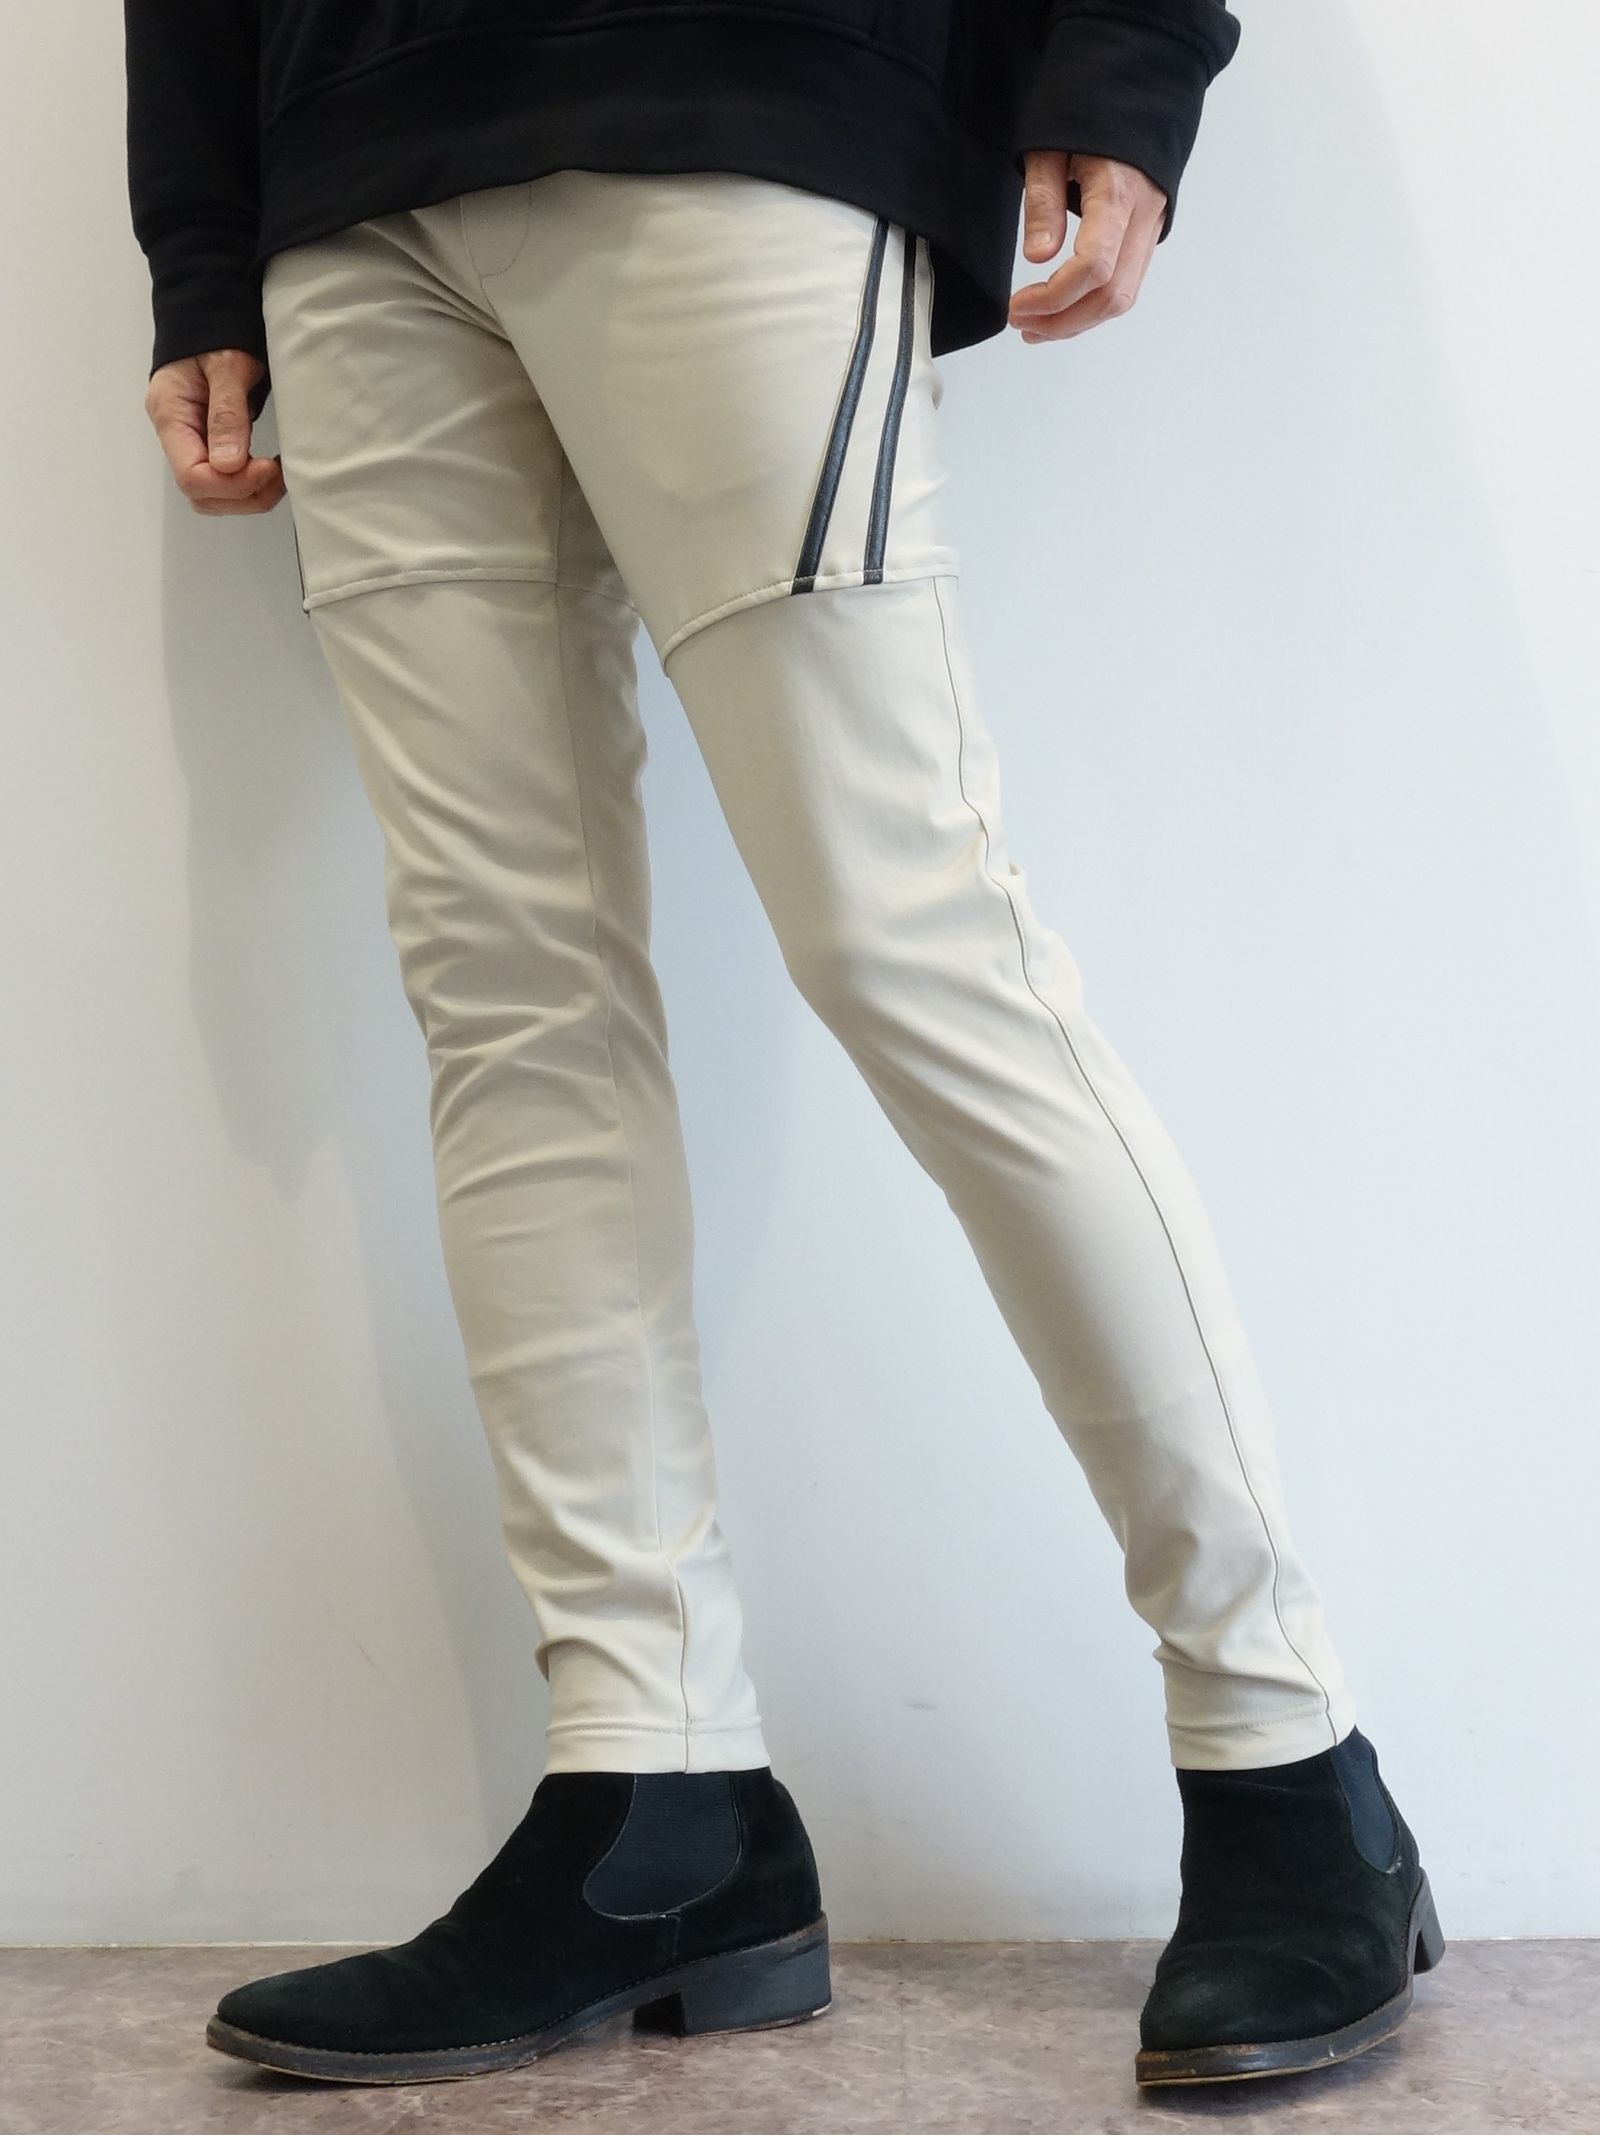 RESOUND CLOTHING - TYLER HEAT LINE PANTS / RC26-ST-026H / 裏起毛